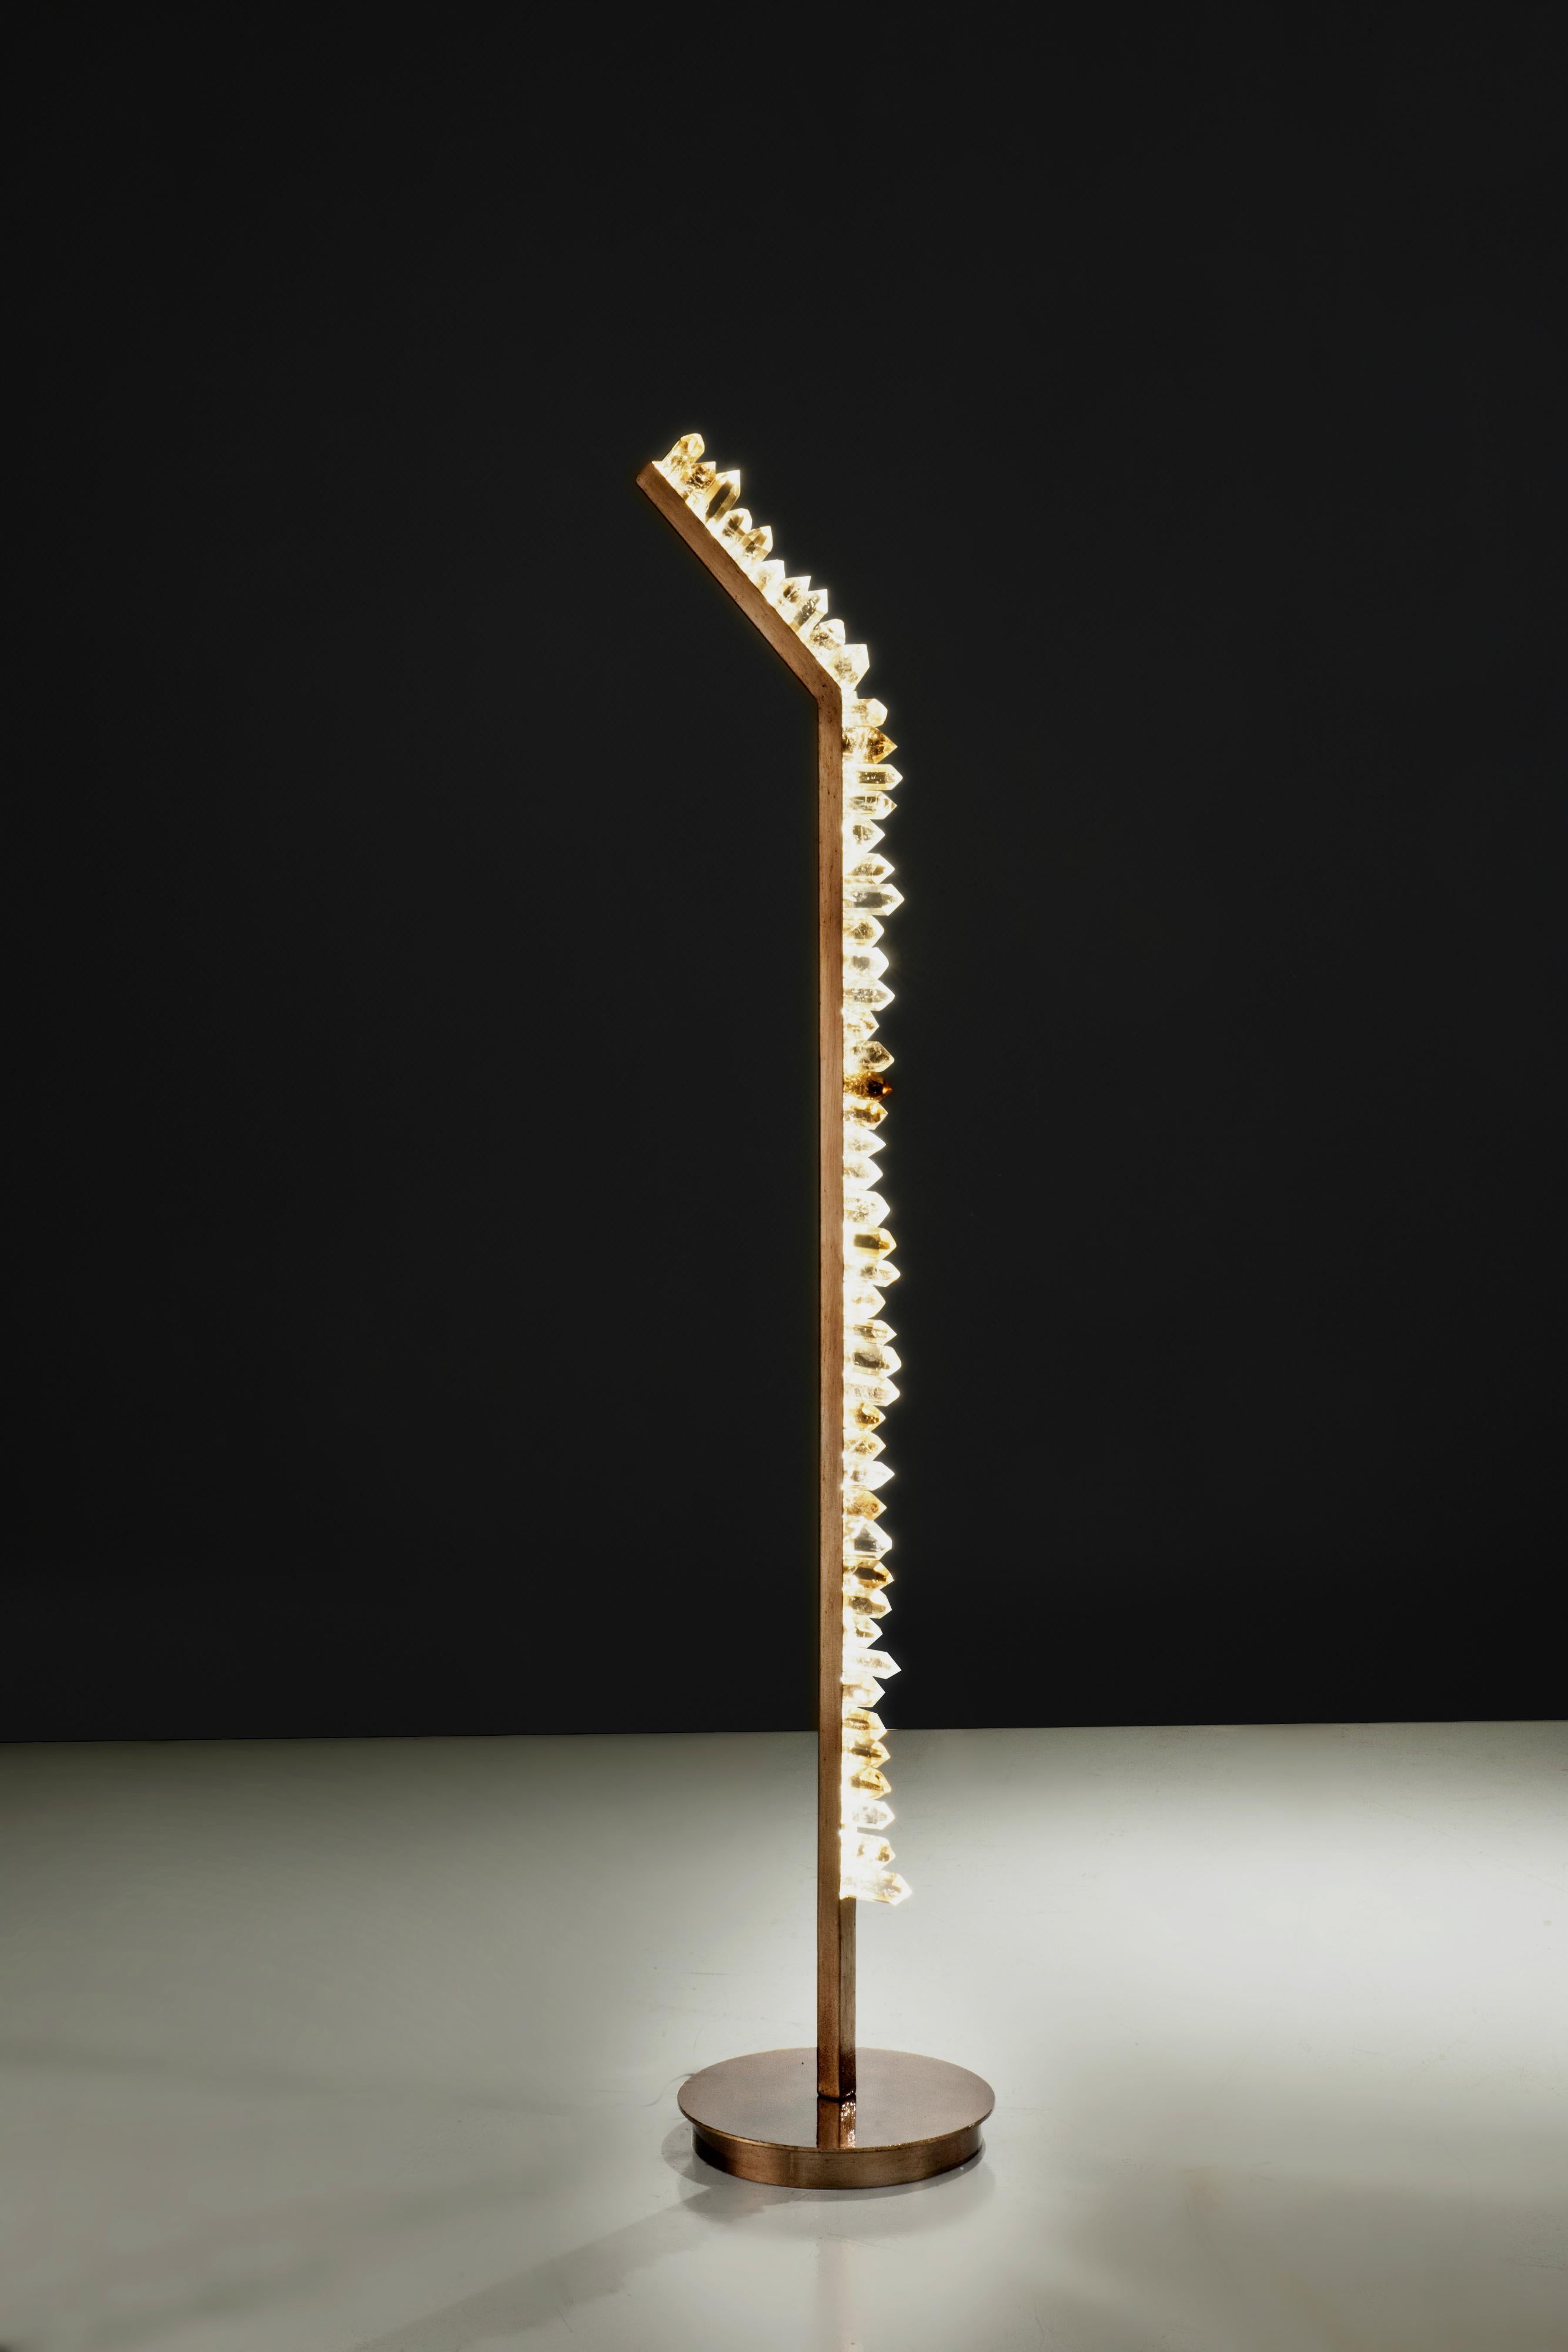 Hand-sulpted white quartz table lamp
Measures: 170 x 30 x 20 cm
01 X LED 7W / 450 lumens.